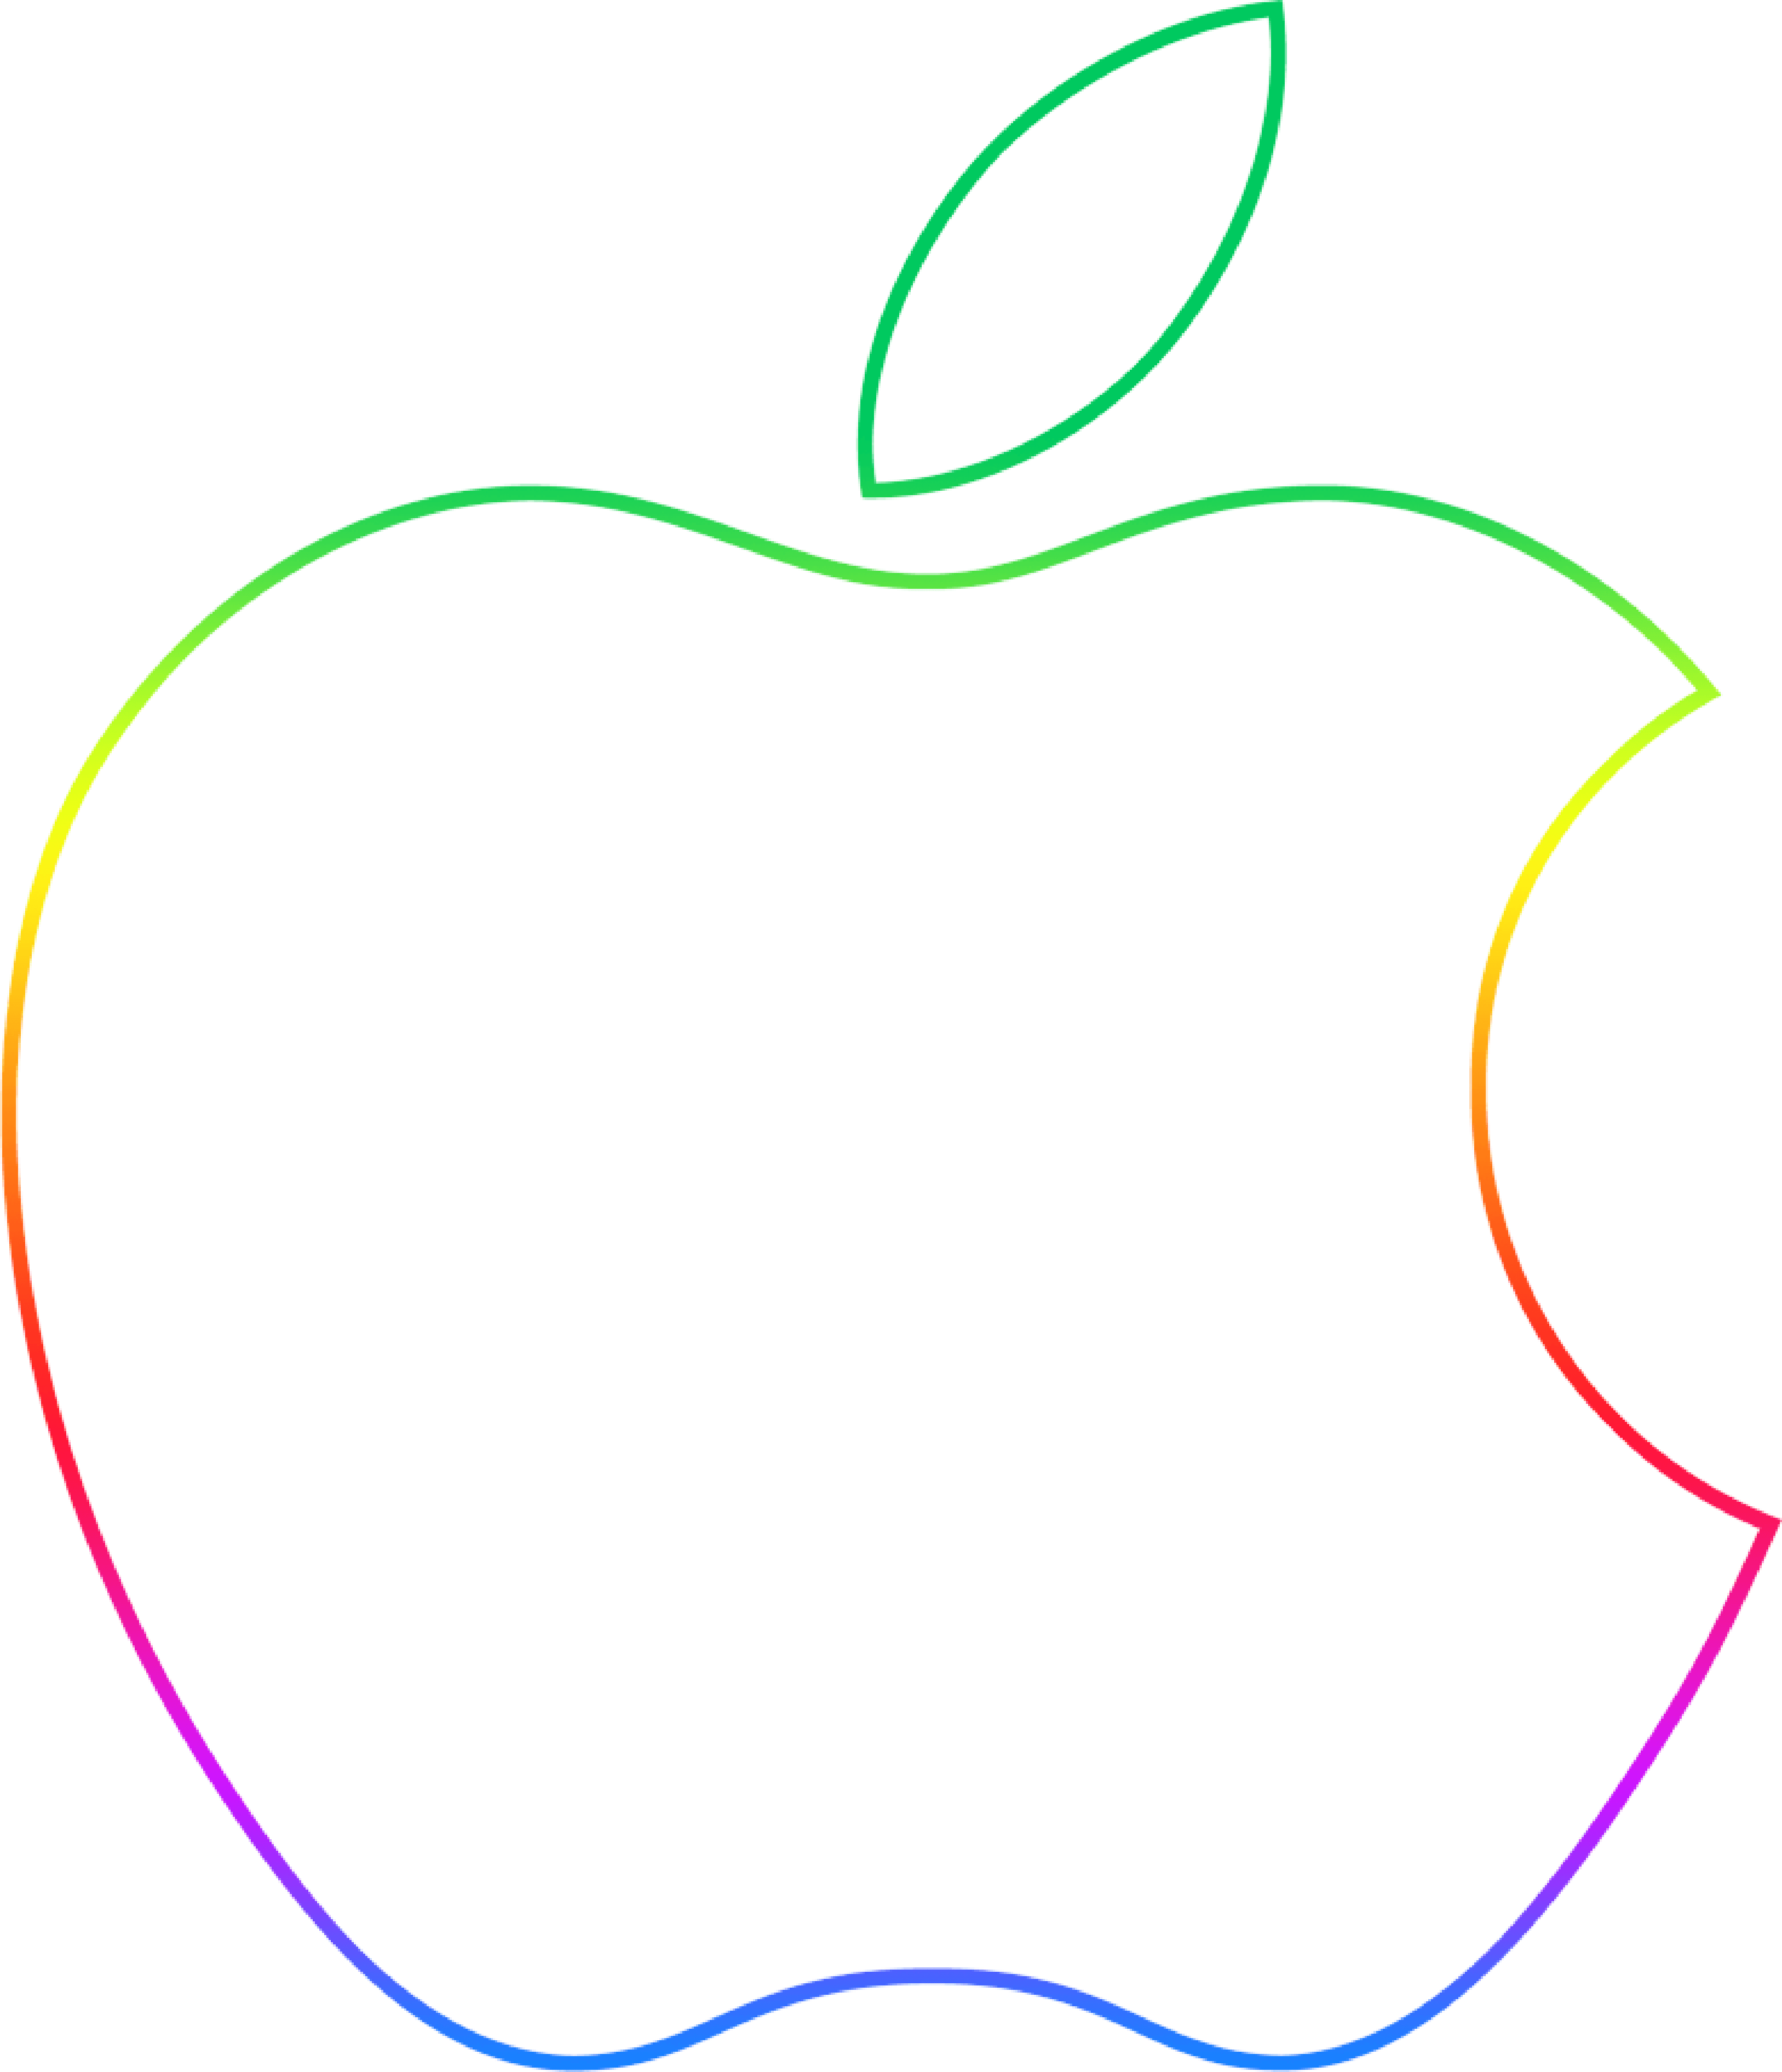 Transparent Apple Logo - Apple logo graphic black and white download transparent background